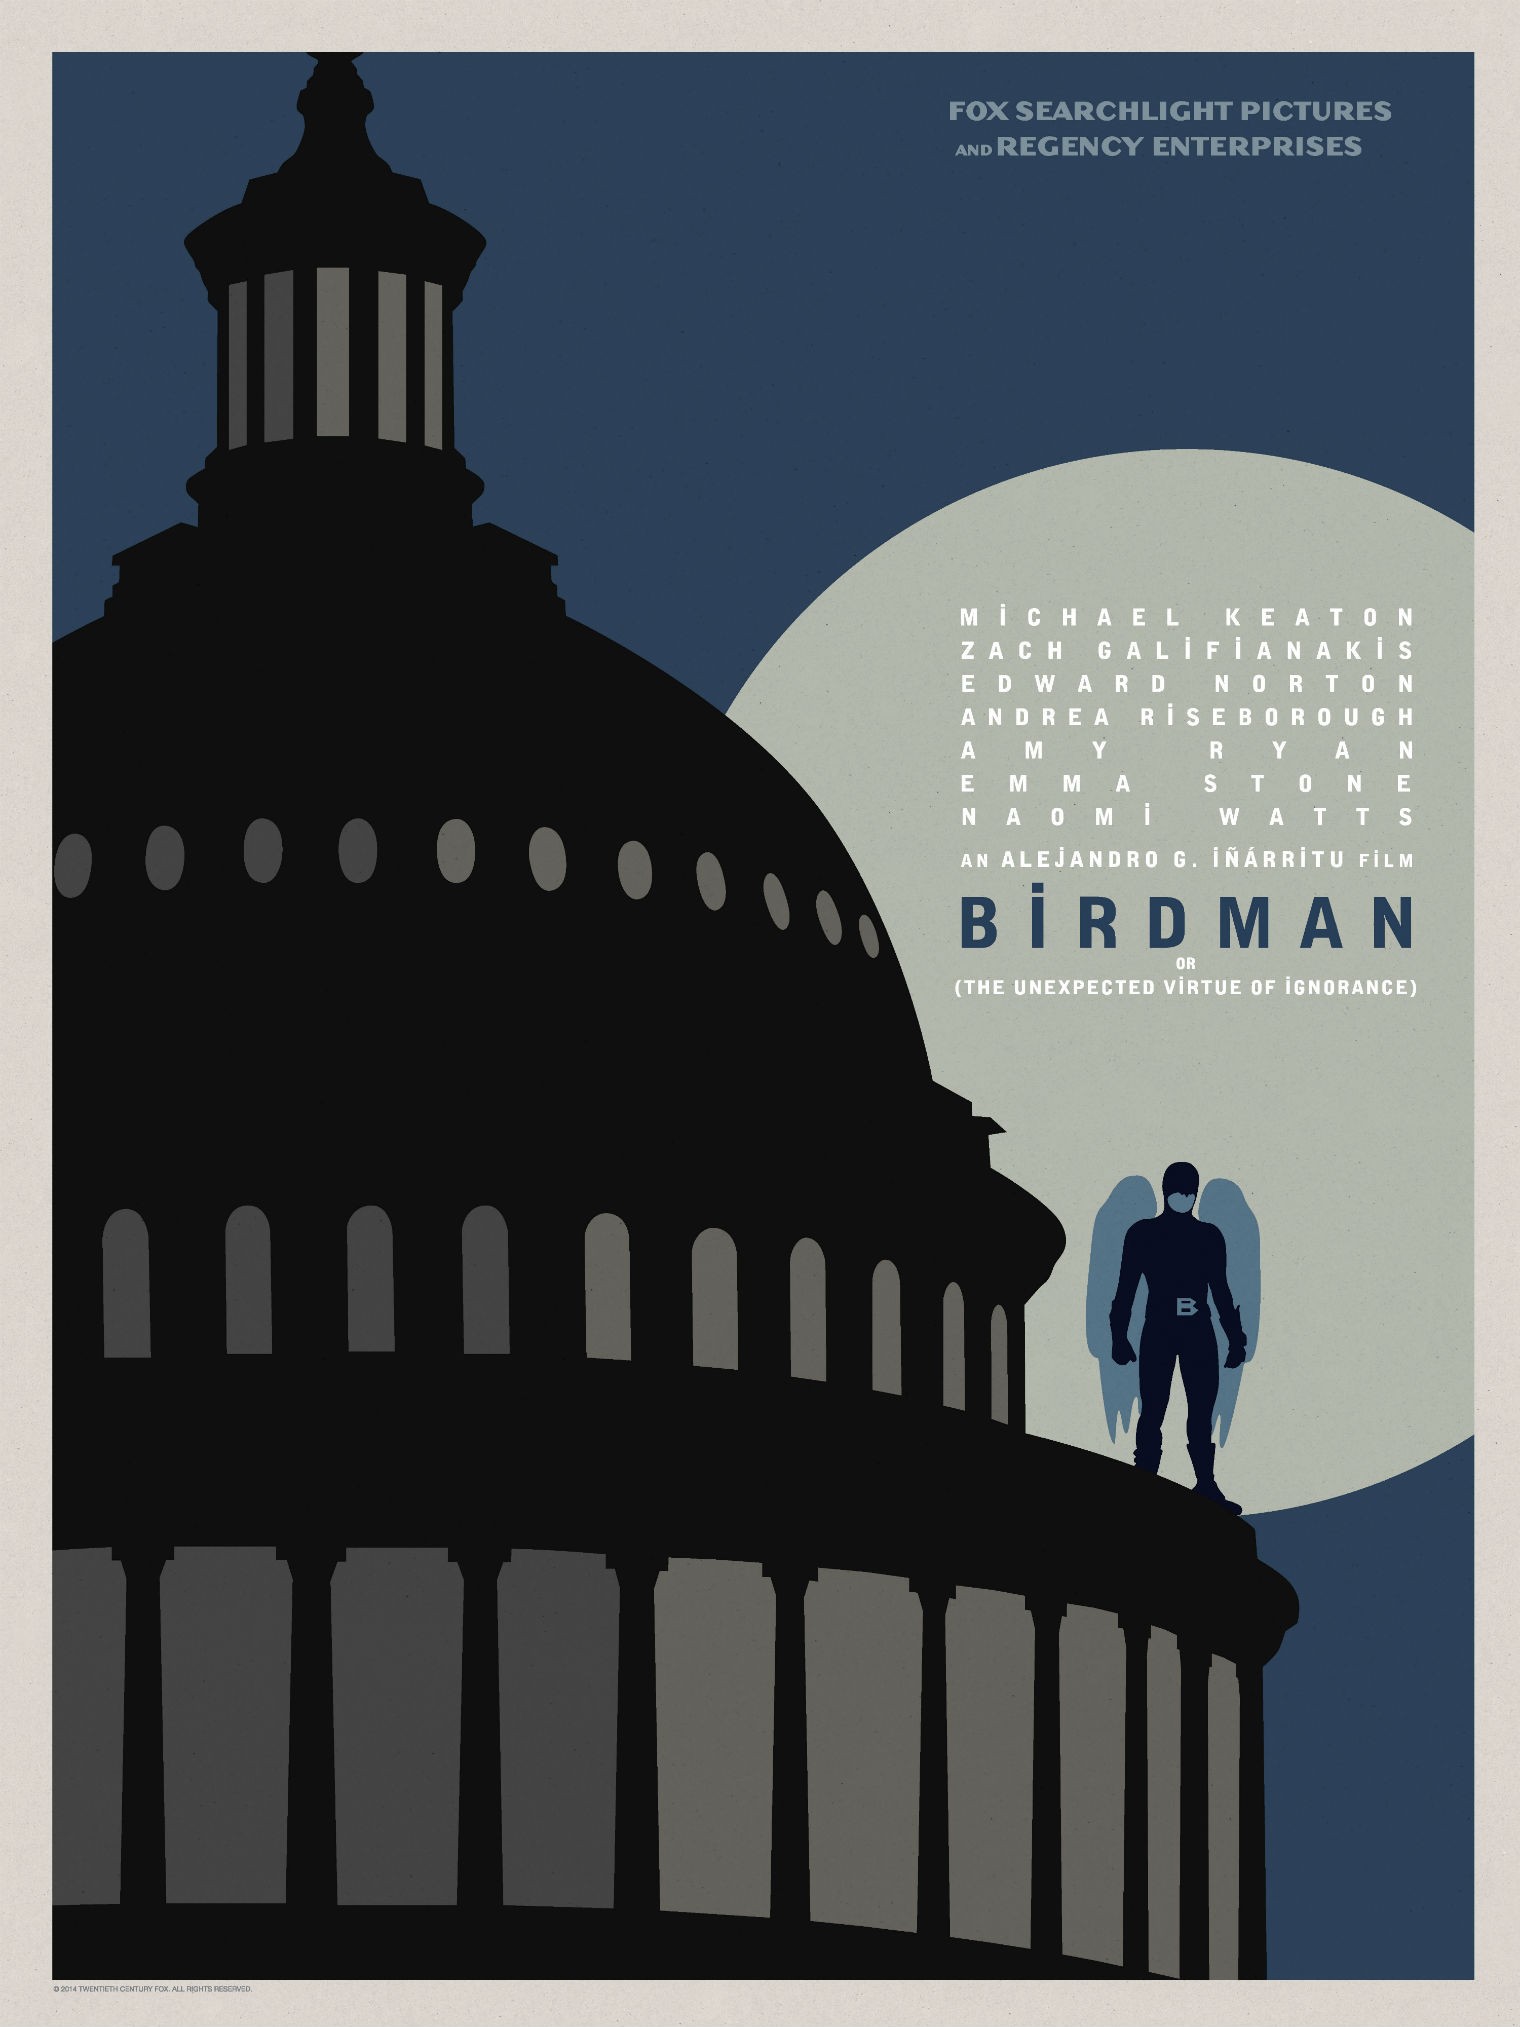 Mega Sized Movie Poster Image for Birdman (#13 of 26)